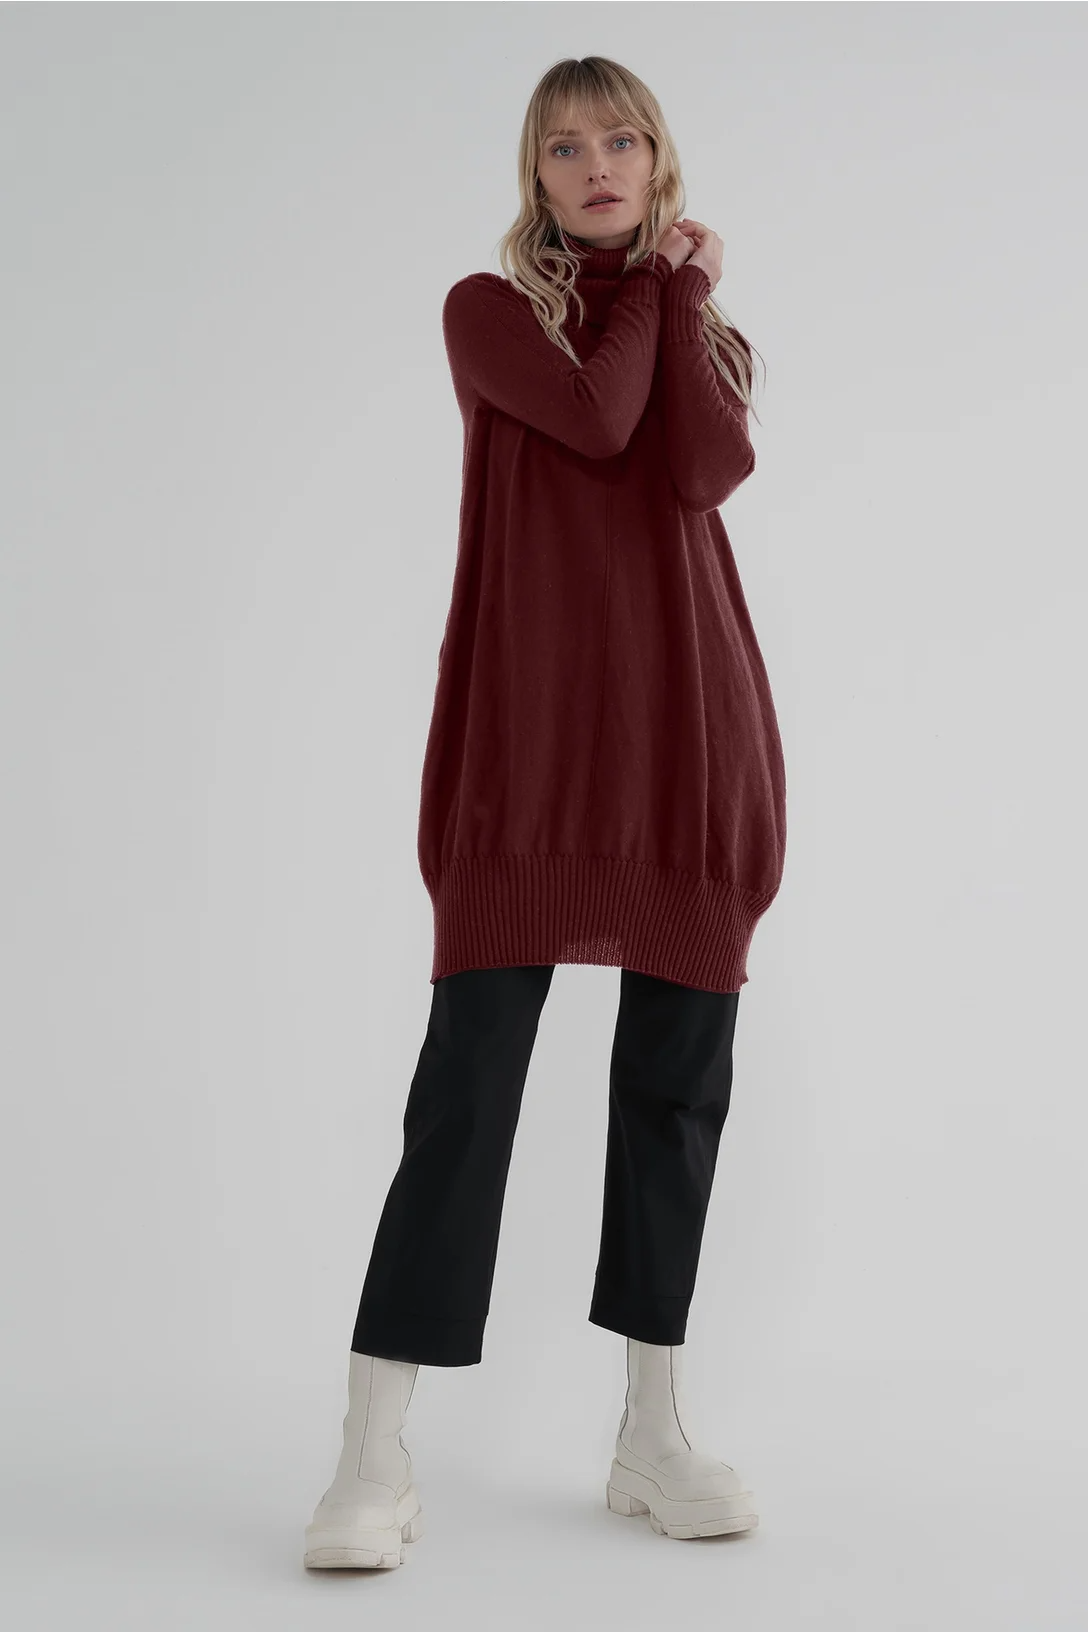 Taylor Inclusive Sweater Dress - Argon